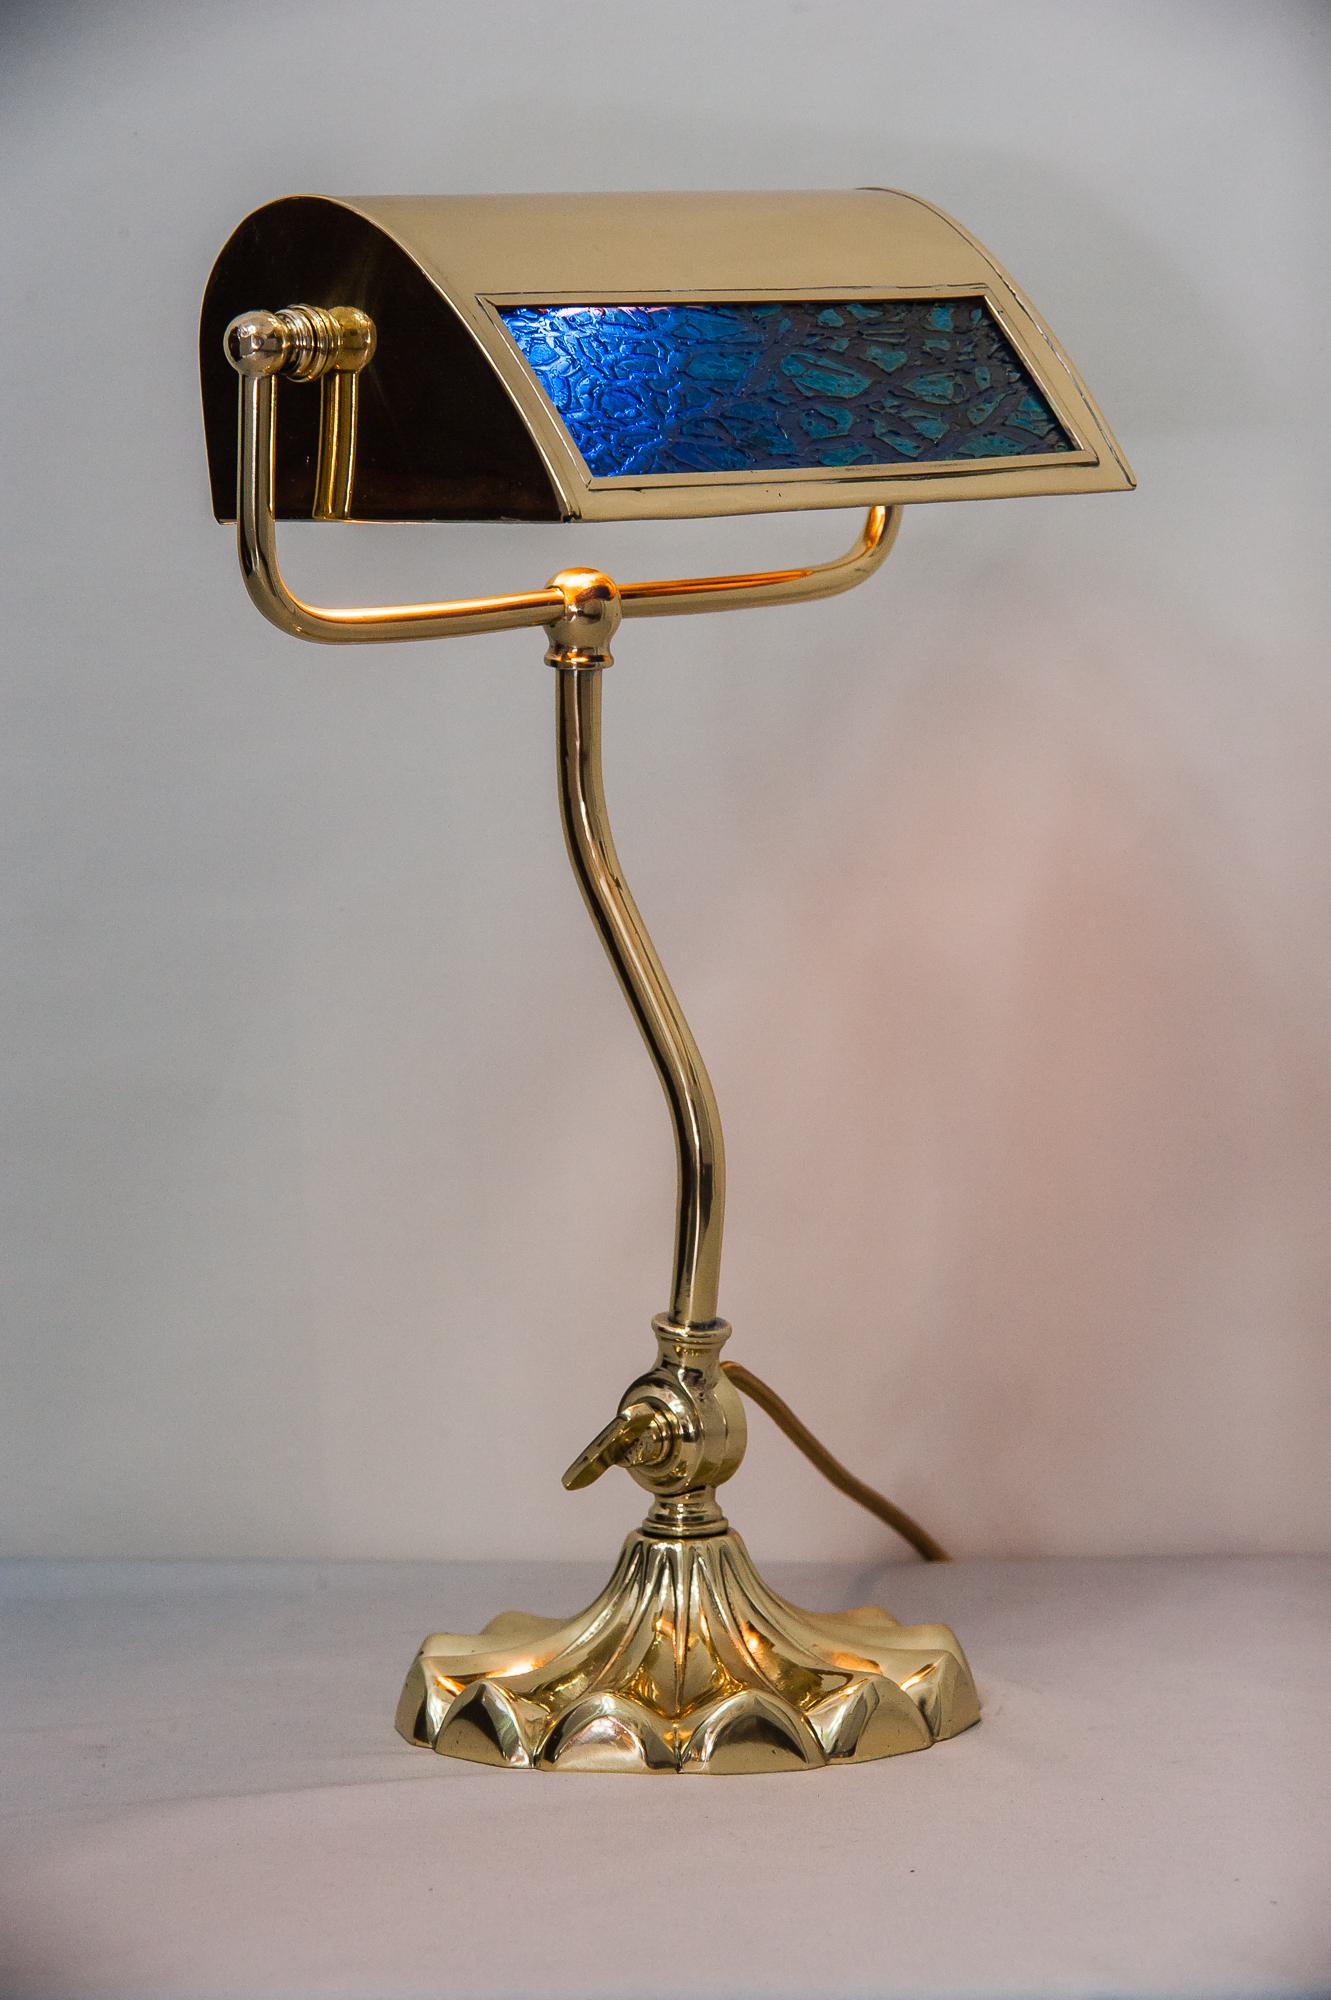 Jugendstil table lamp circa 1909 with original lötz glass 
Polished and stove enameled.